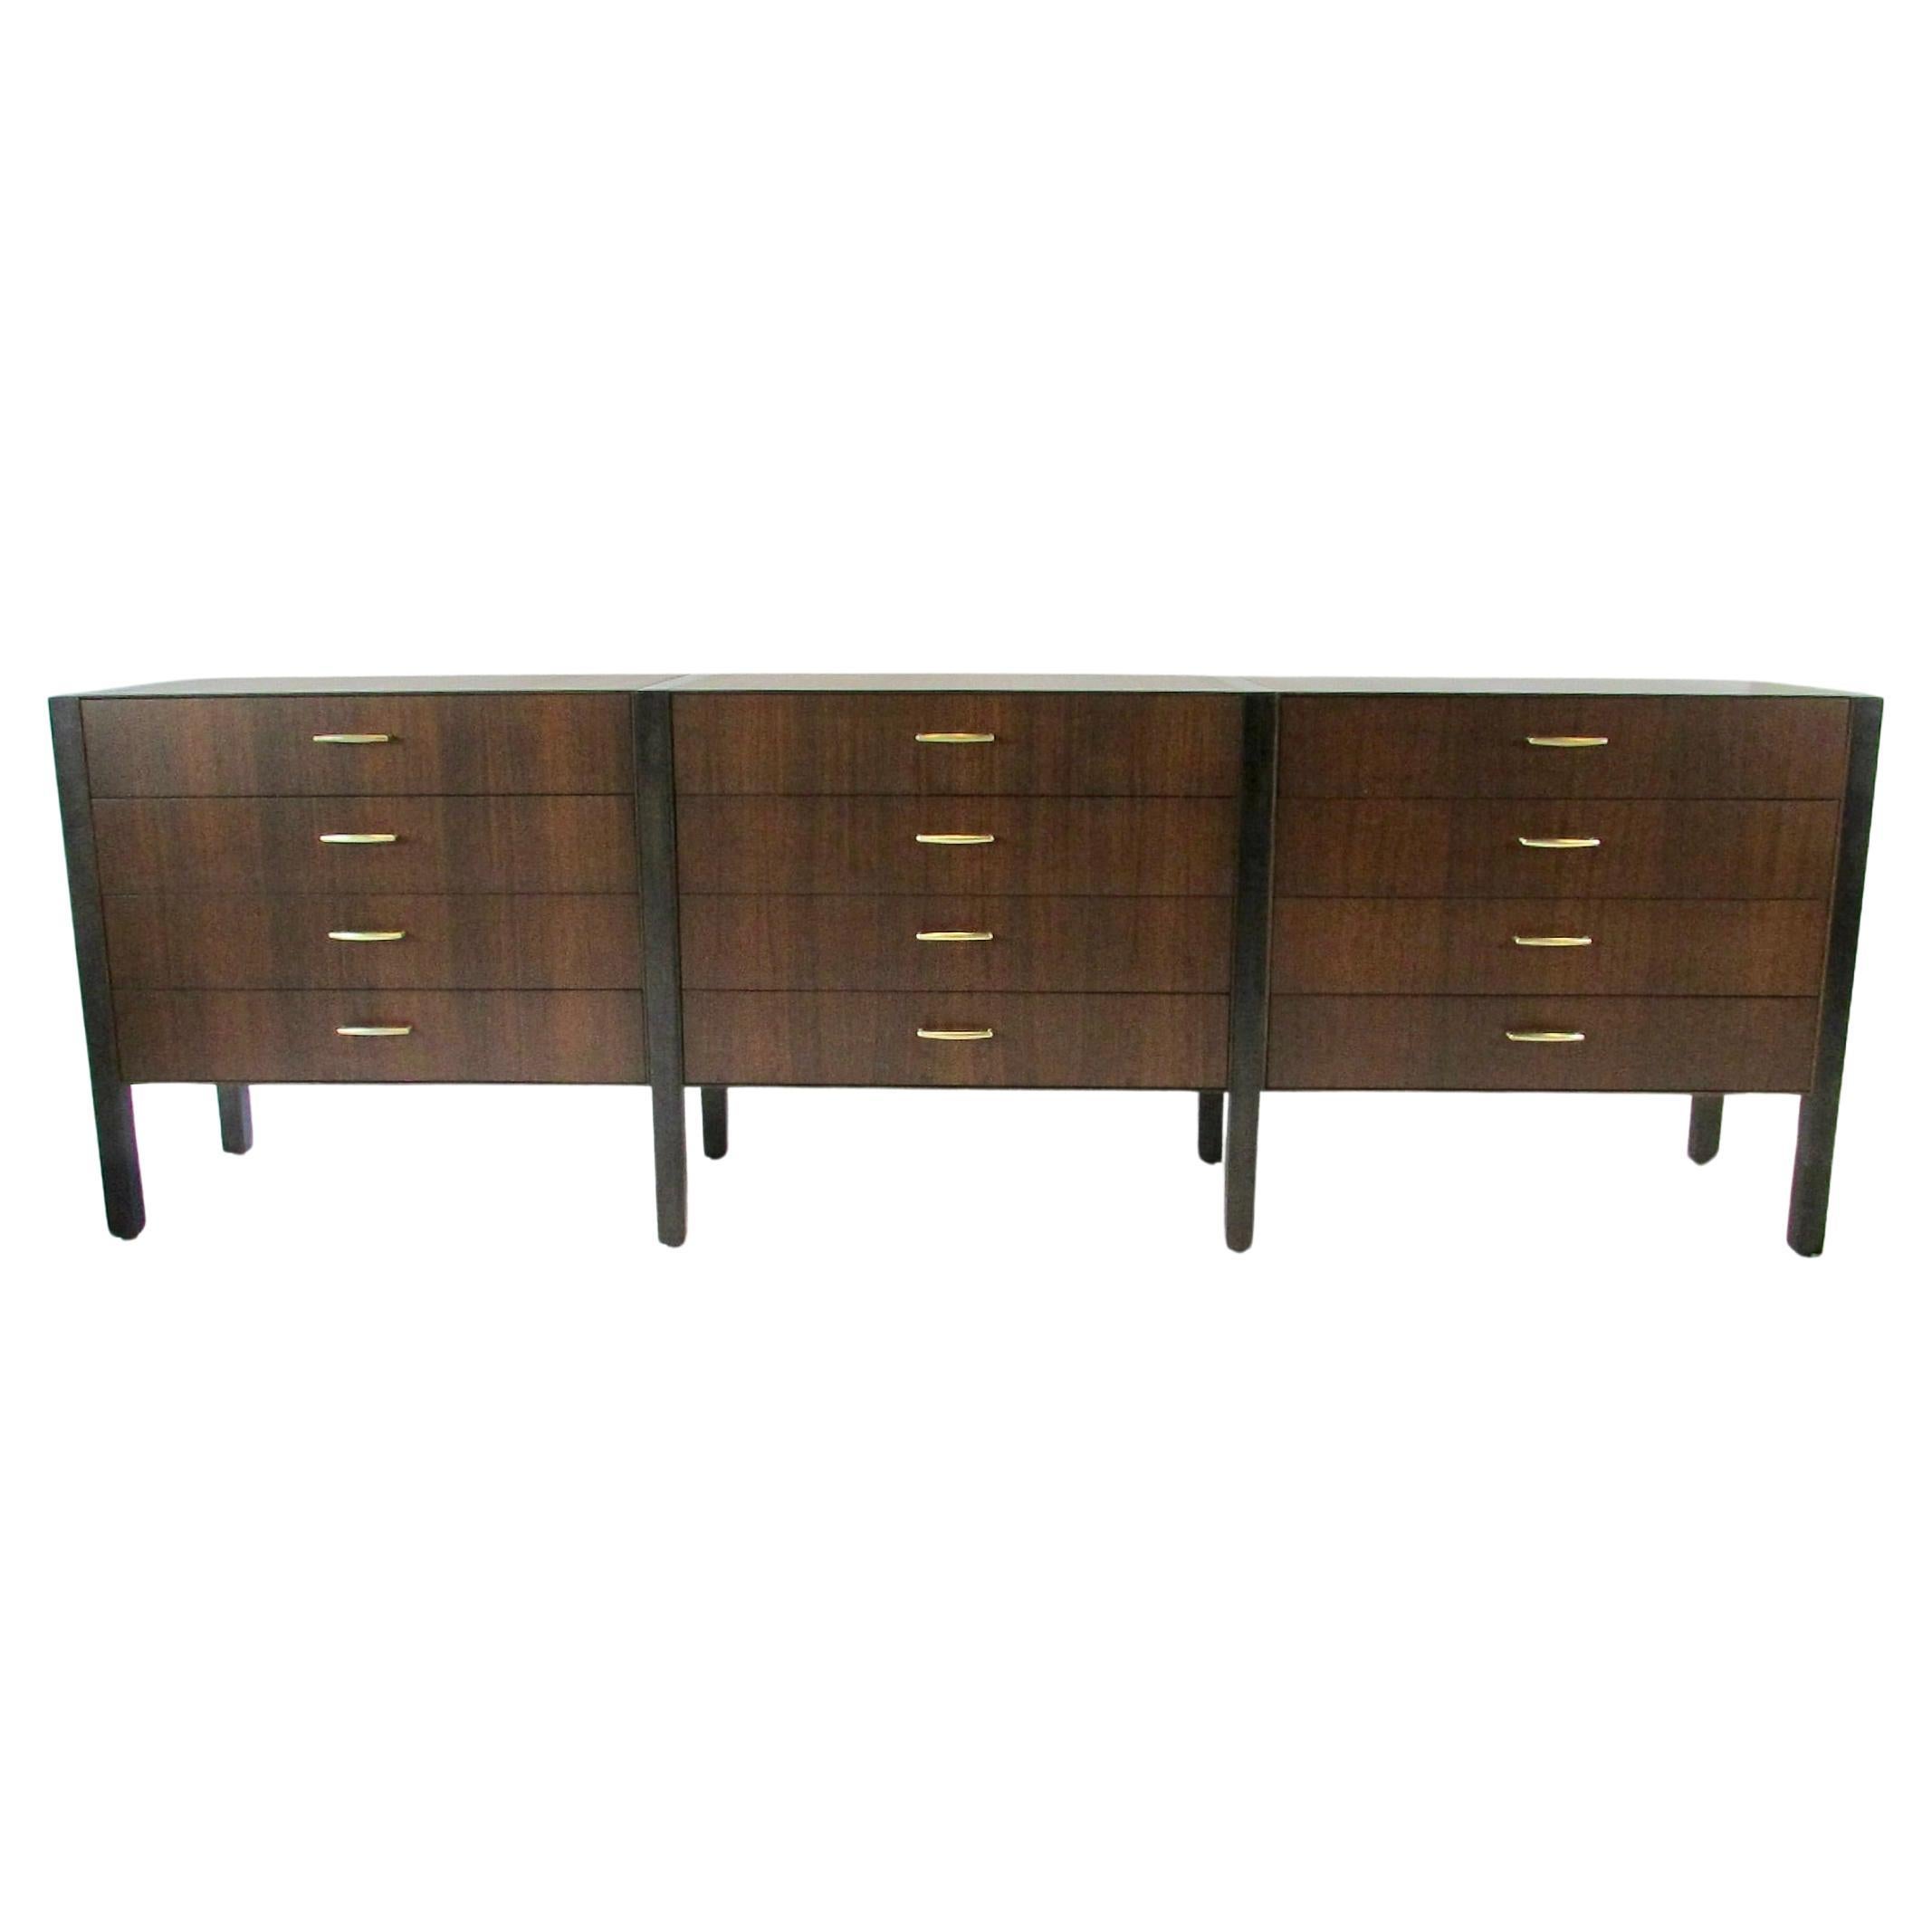 Fine long low twelve drawer Directional Furniture custom collection dresser